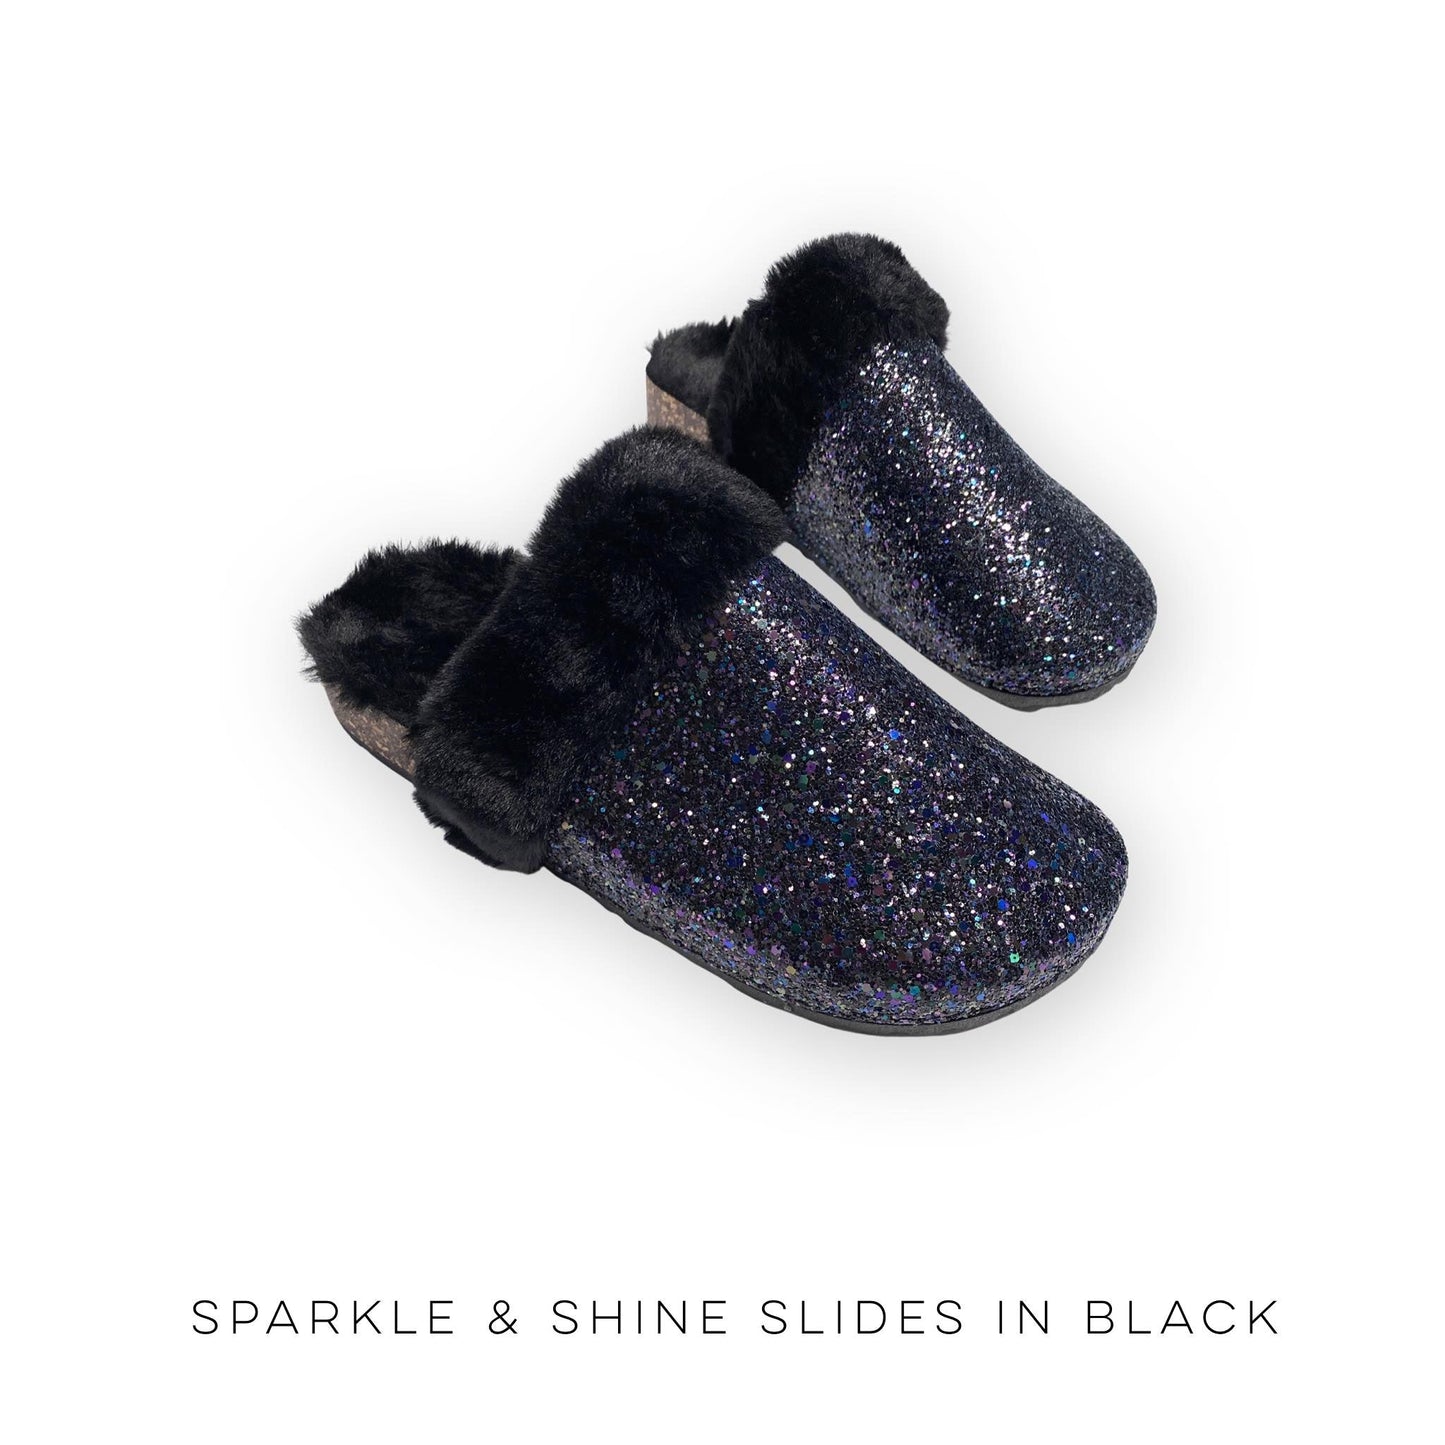 Sparkle & Shine Slides in Black